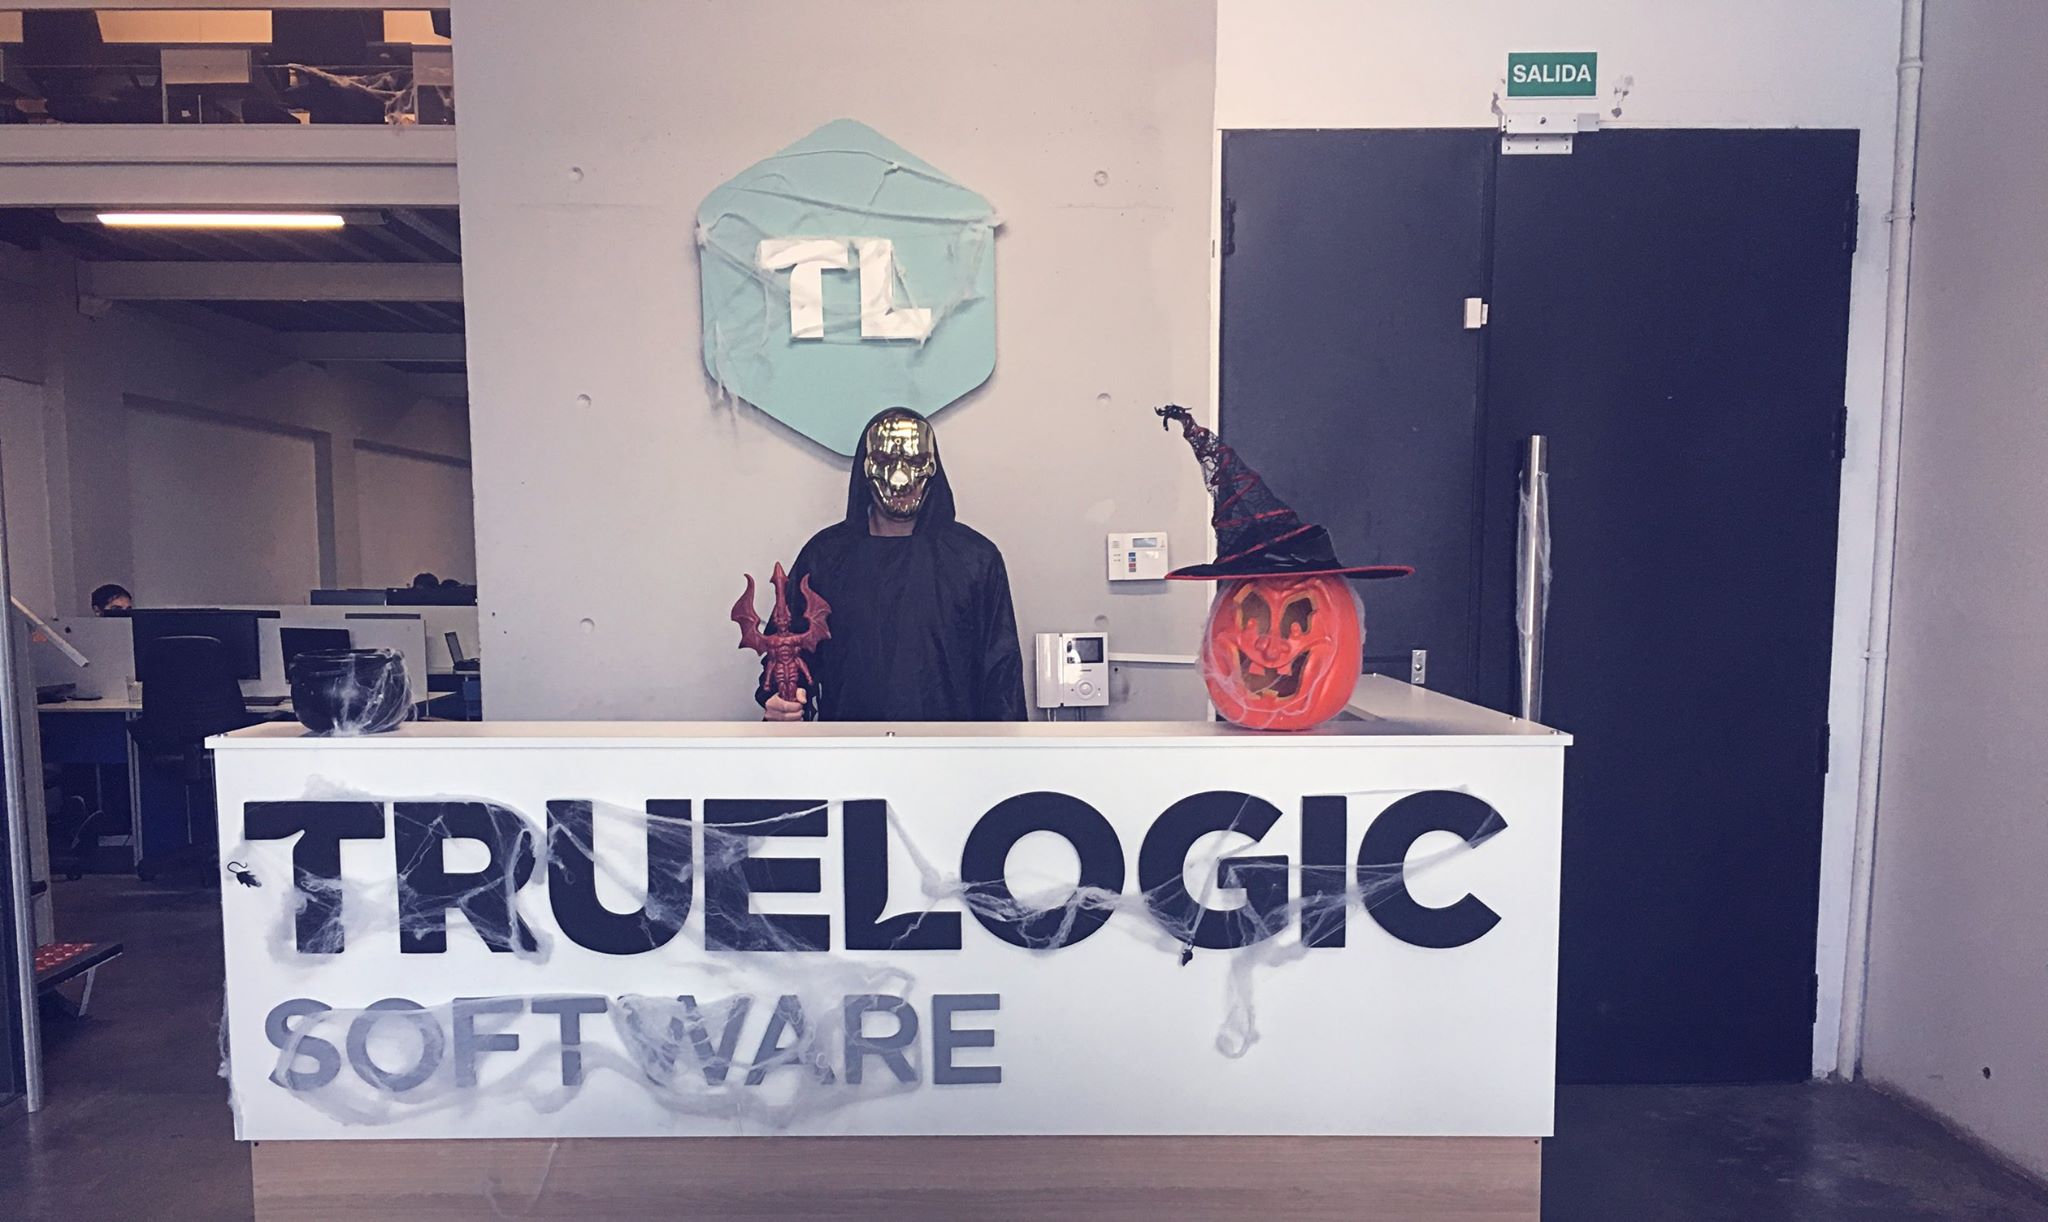 About truelogicsoftware